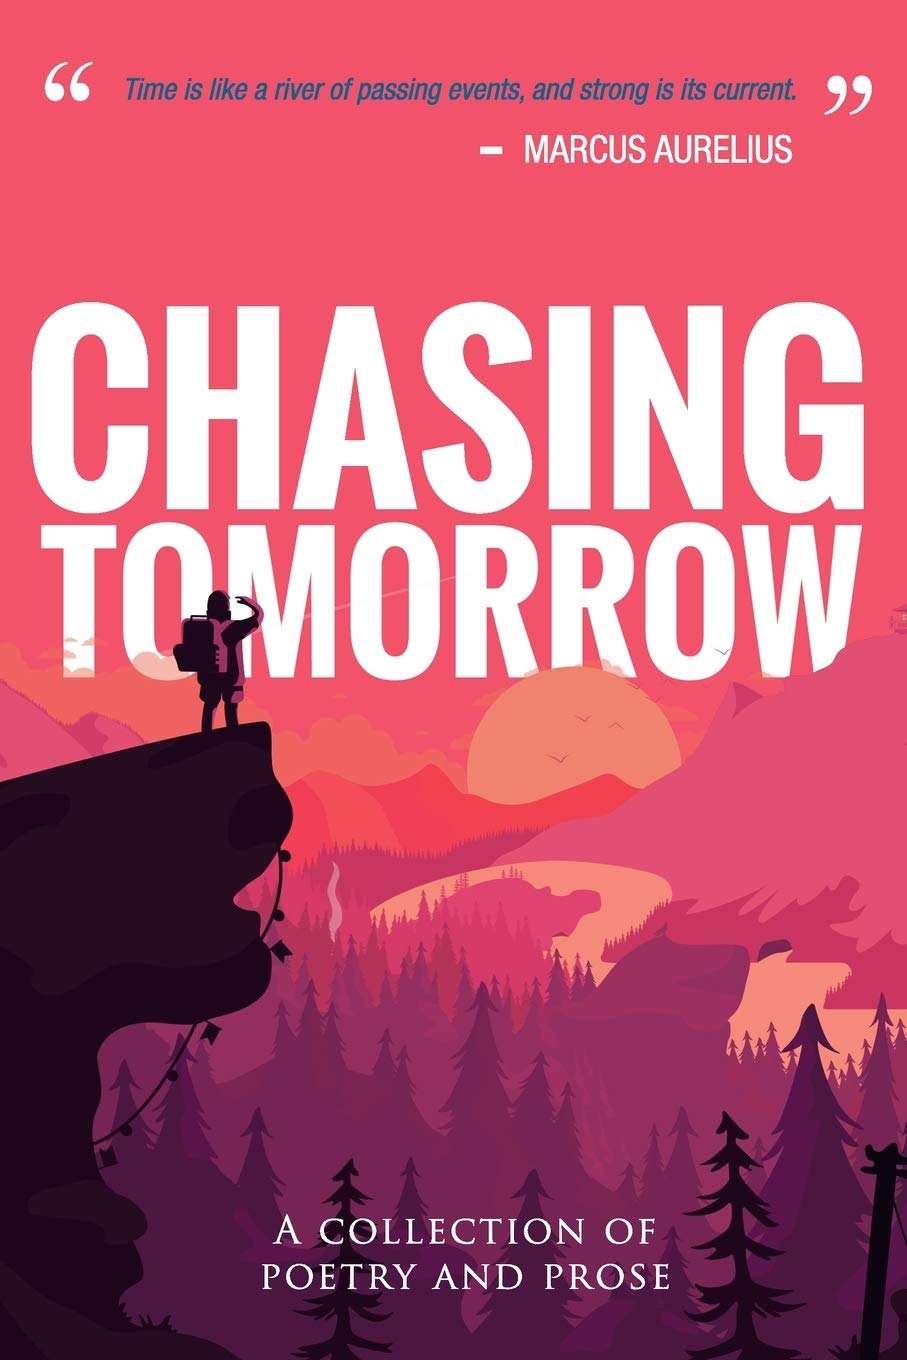 Chasing Tomorrow